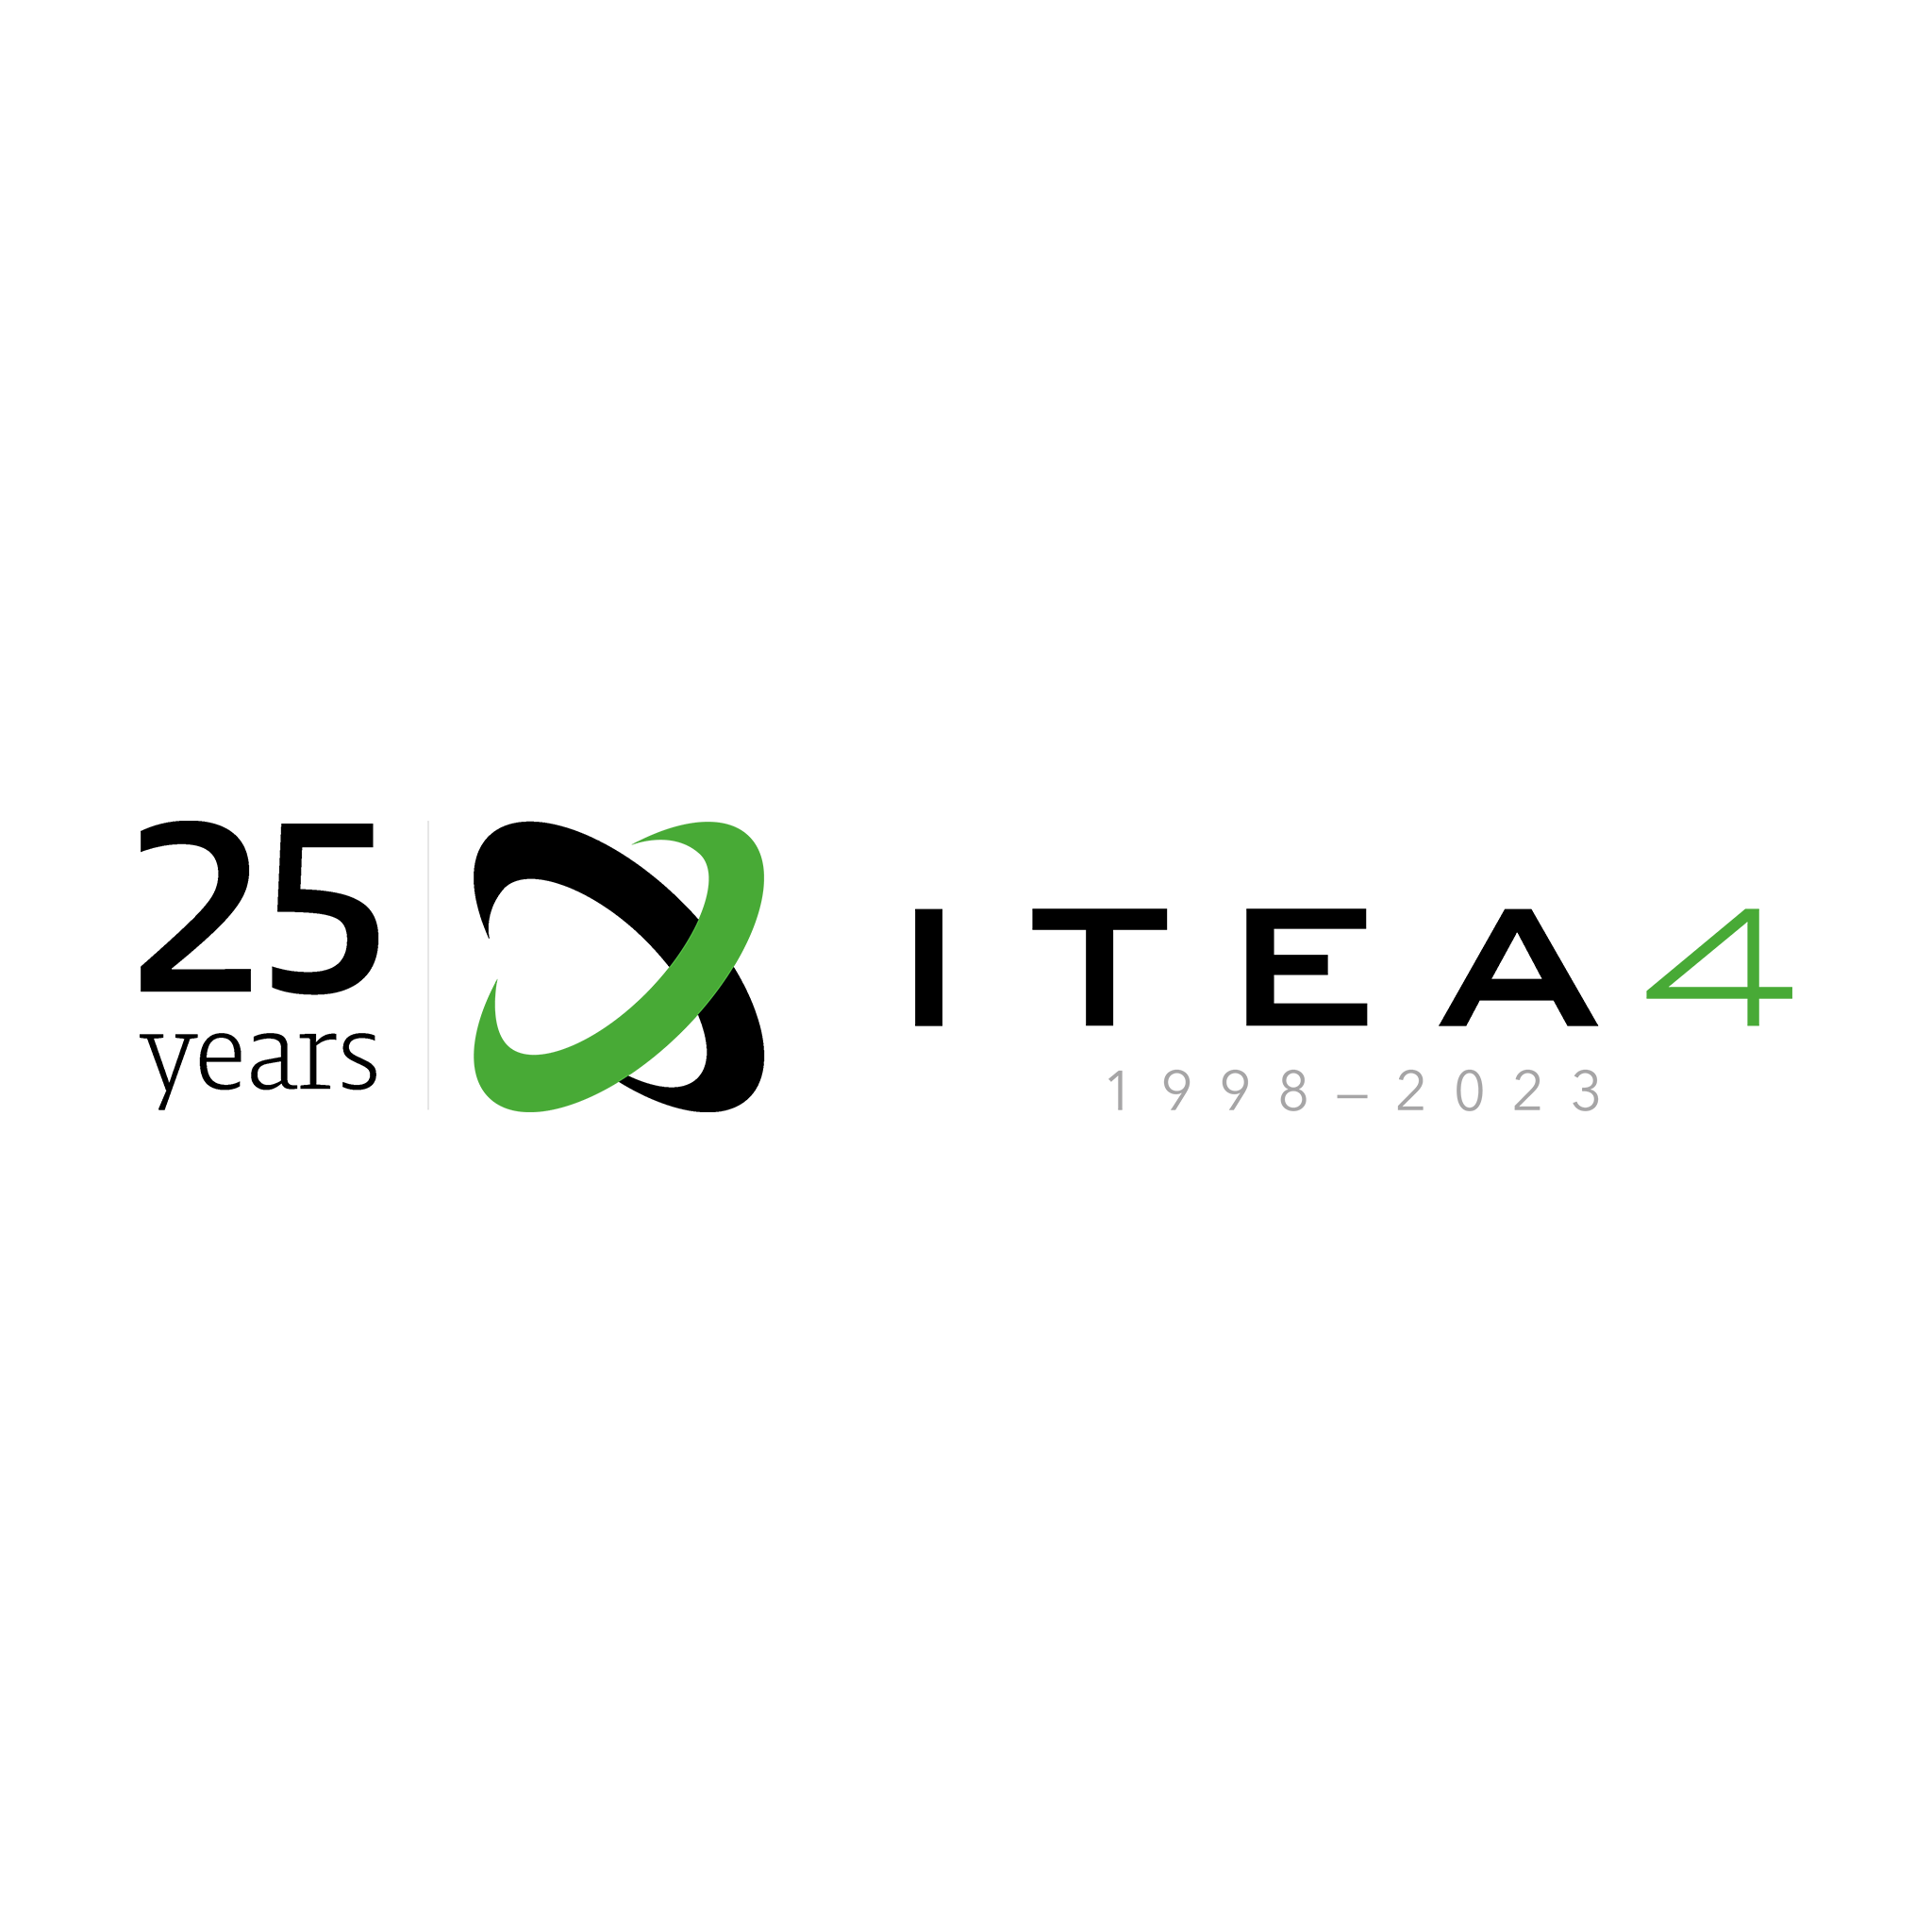 25 years anniversary ITEA logo in green and black